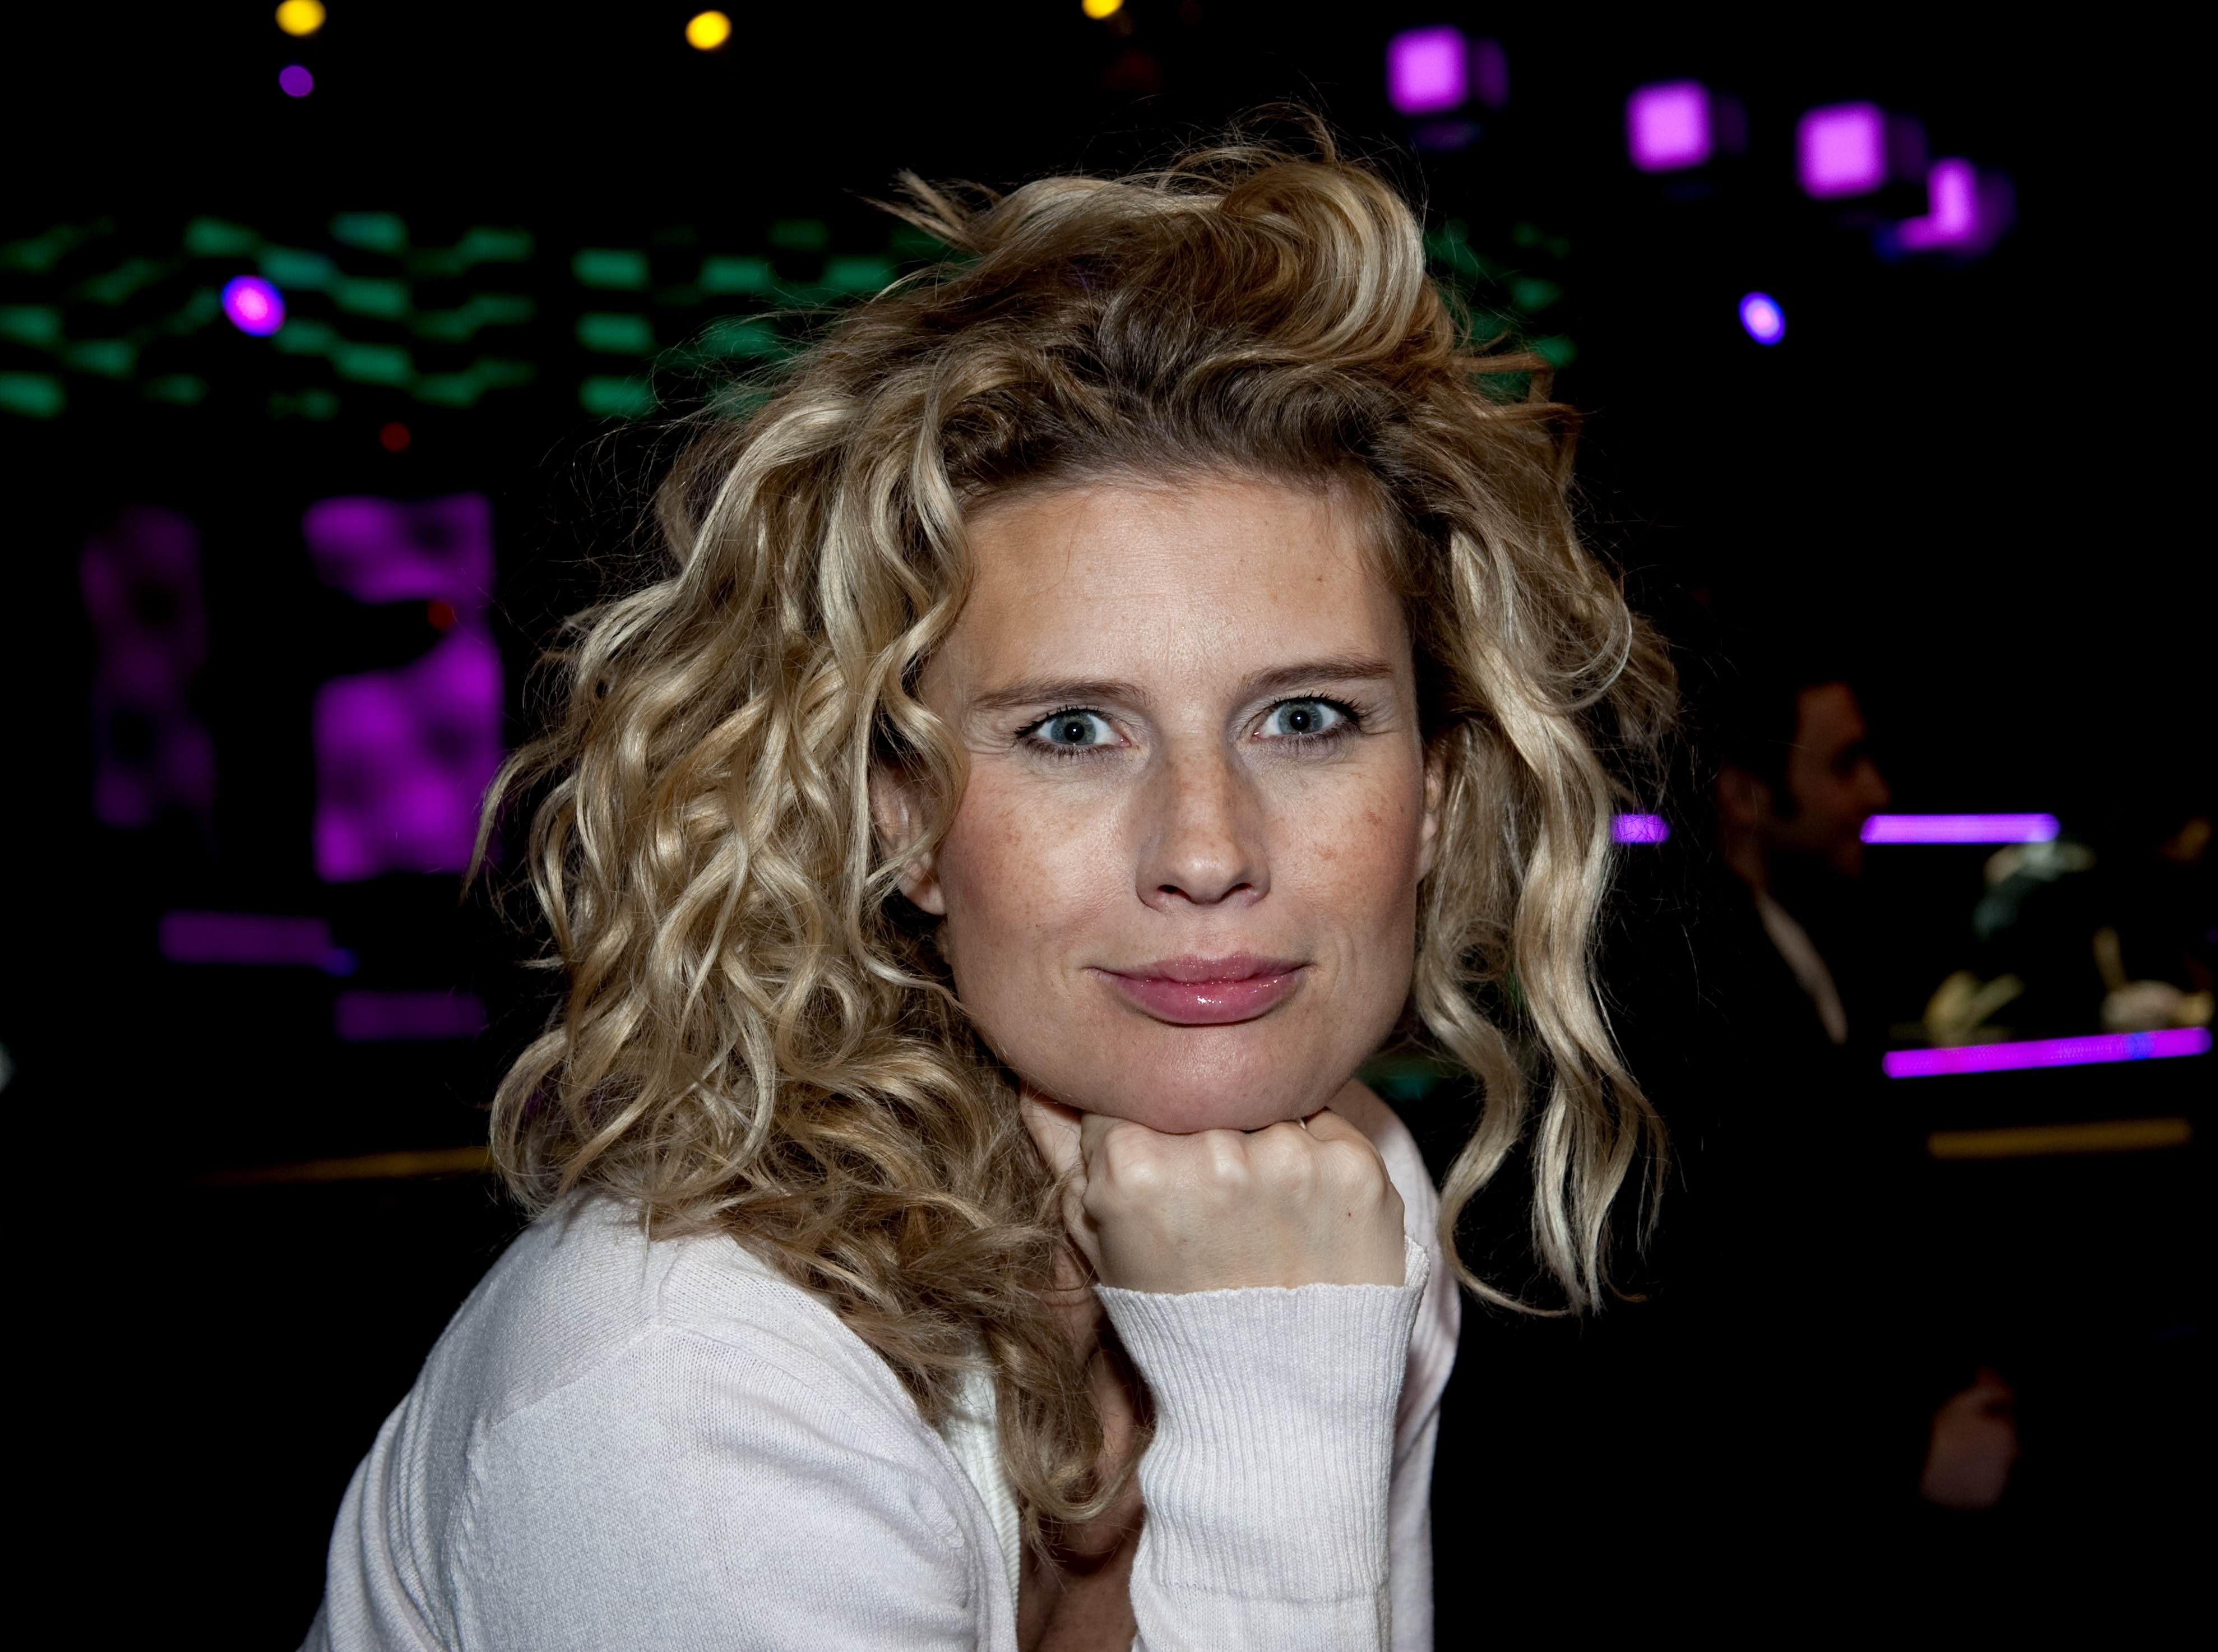 Christine Meltzer, Anna Bergendahl, Melodifestivalen 2010, Eurovision Song Contest 2010